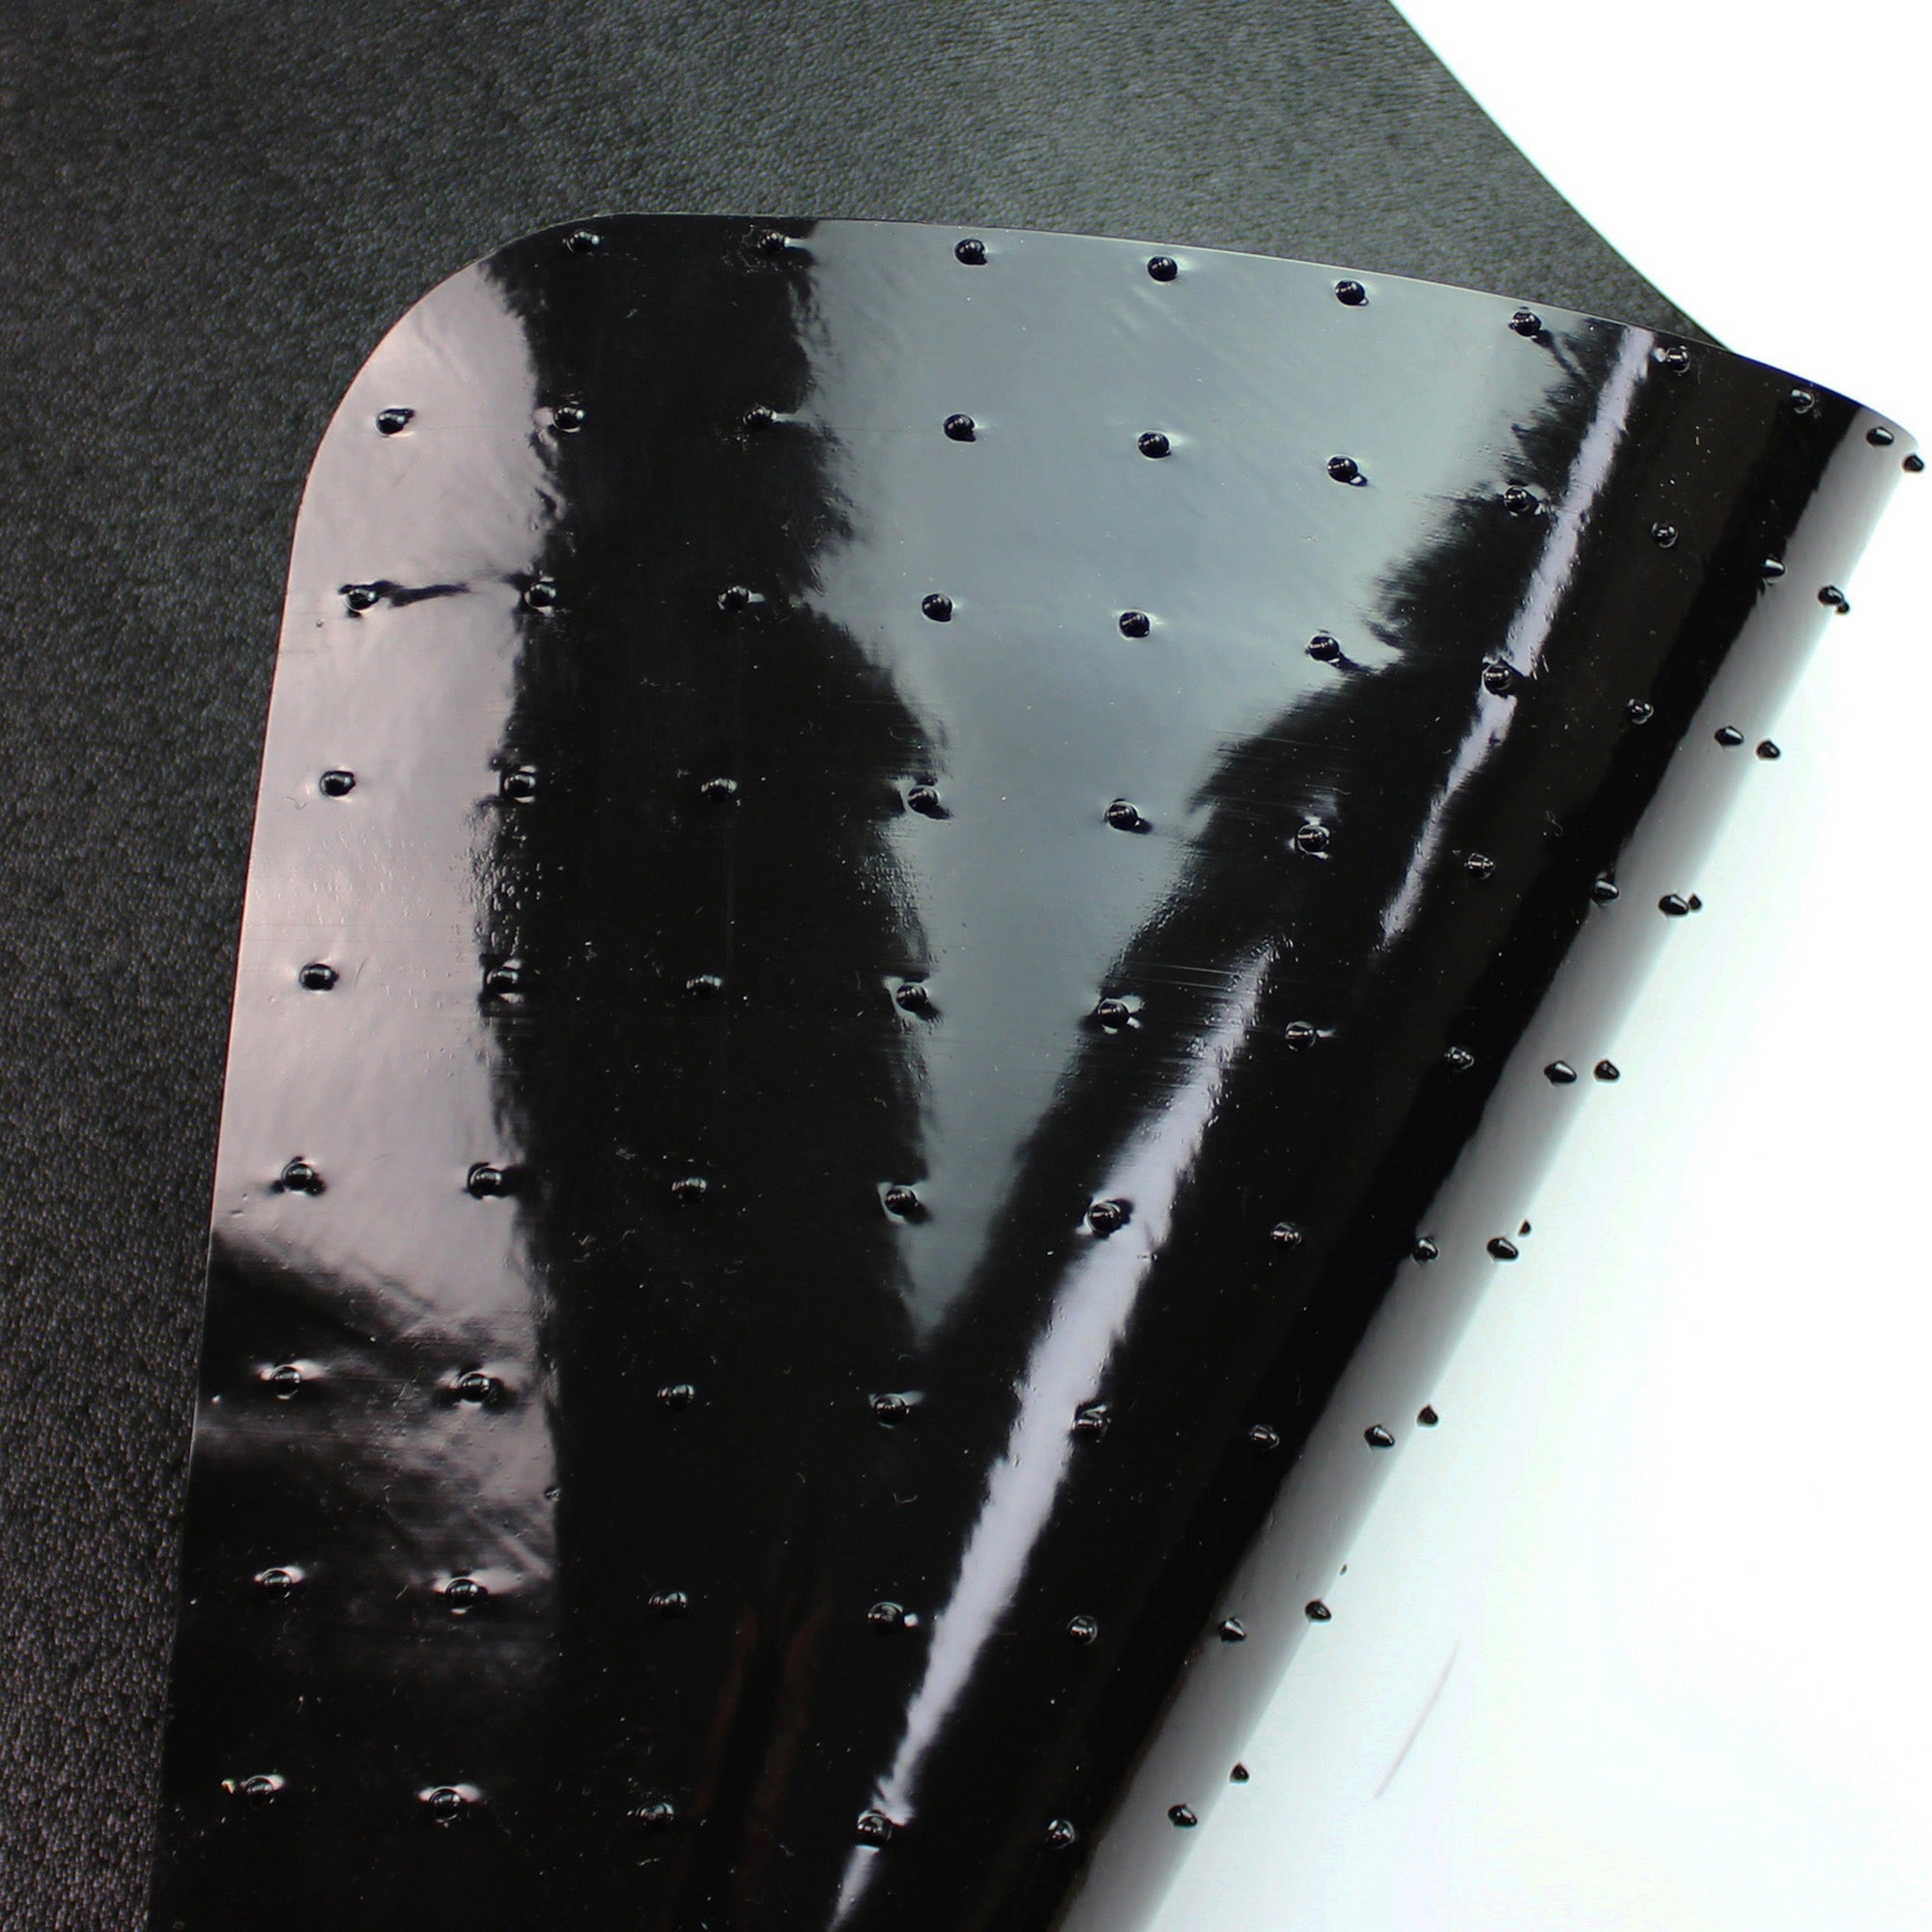 advantagemat-black-vinyl-rectangular-chair-mat-for-carpets-48-x-60-carpeted-floor-60-length-x-48-width-x-0090-depth-x-0090-thickness-rectangular-classic-polyvinyl-chloride-pvc-vinyl-black-1each-taa-compliant_flrfc114860lebv - 2